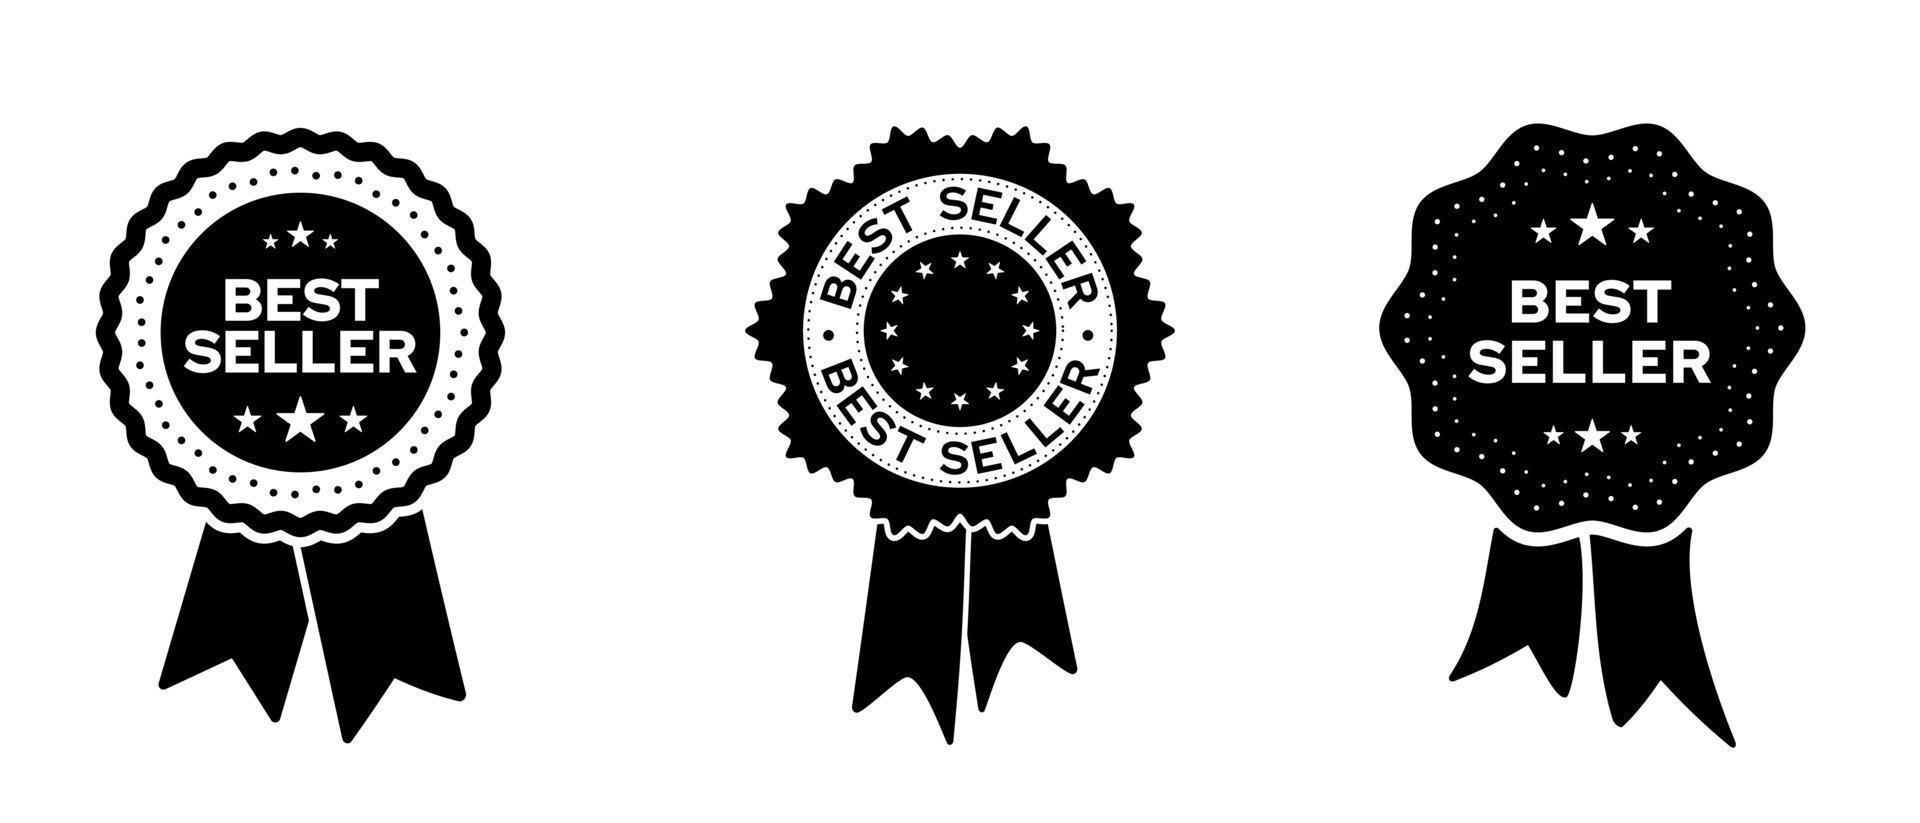 Best seller ribbon badge icon set. Vector illustration